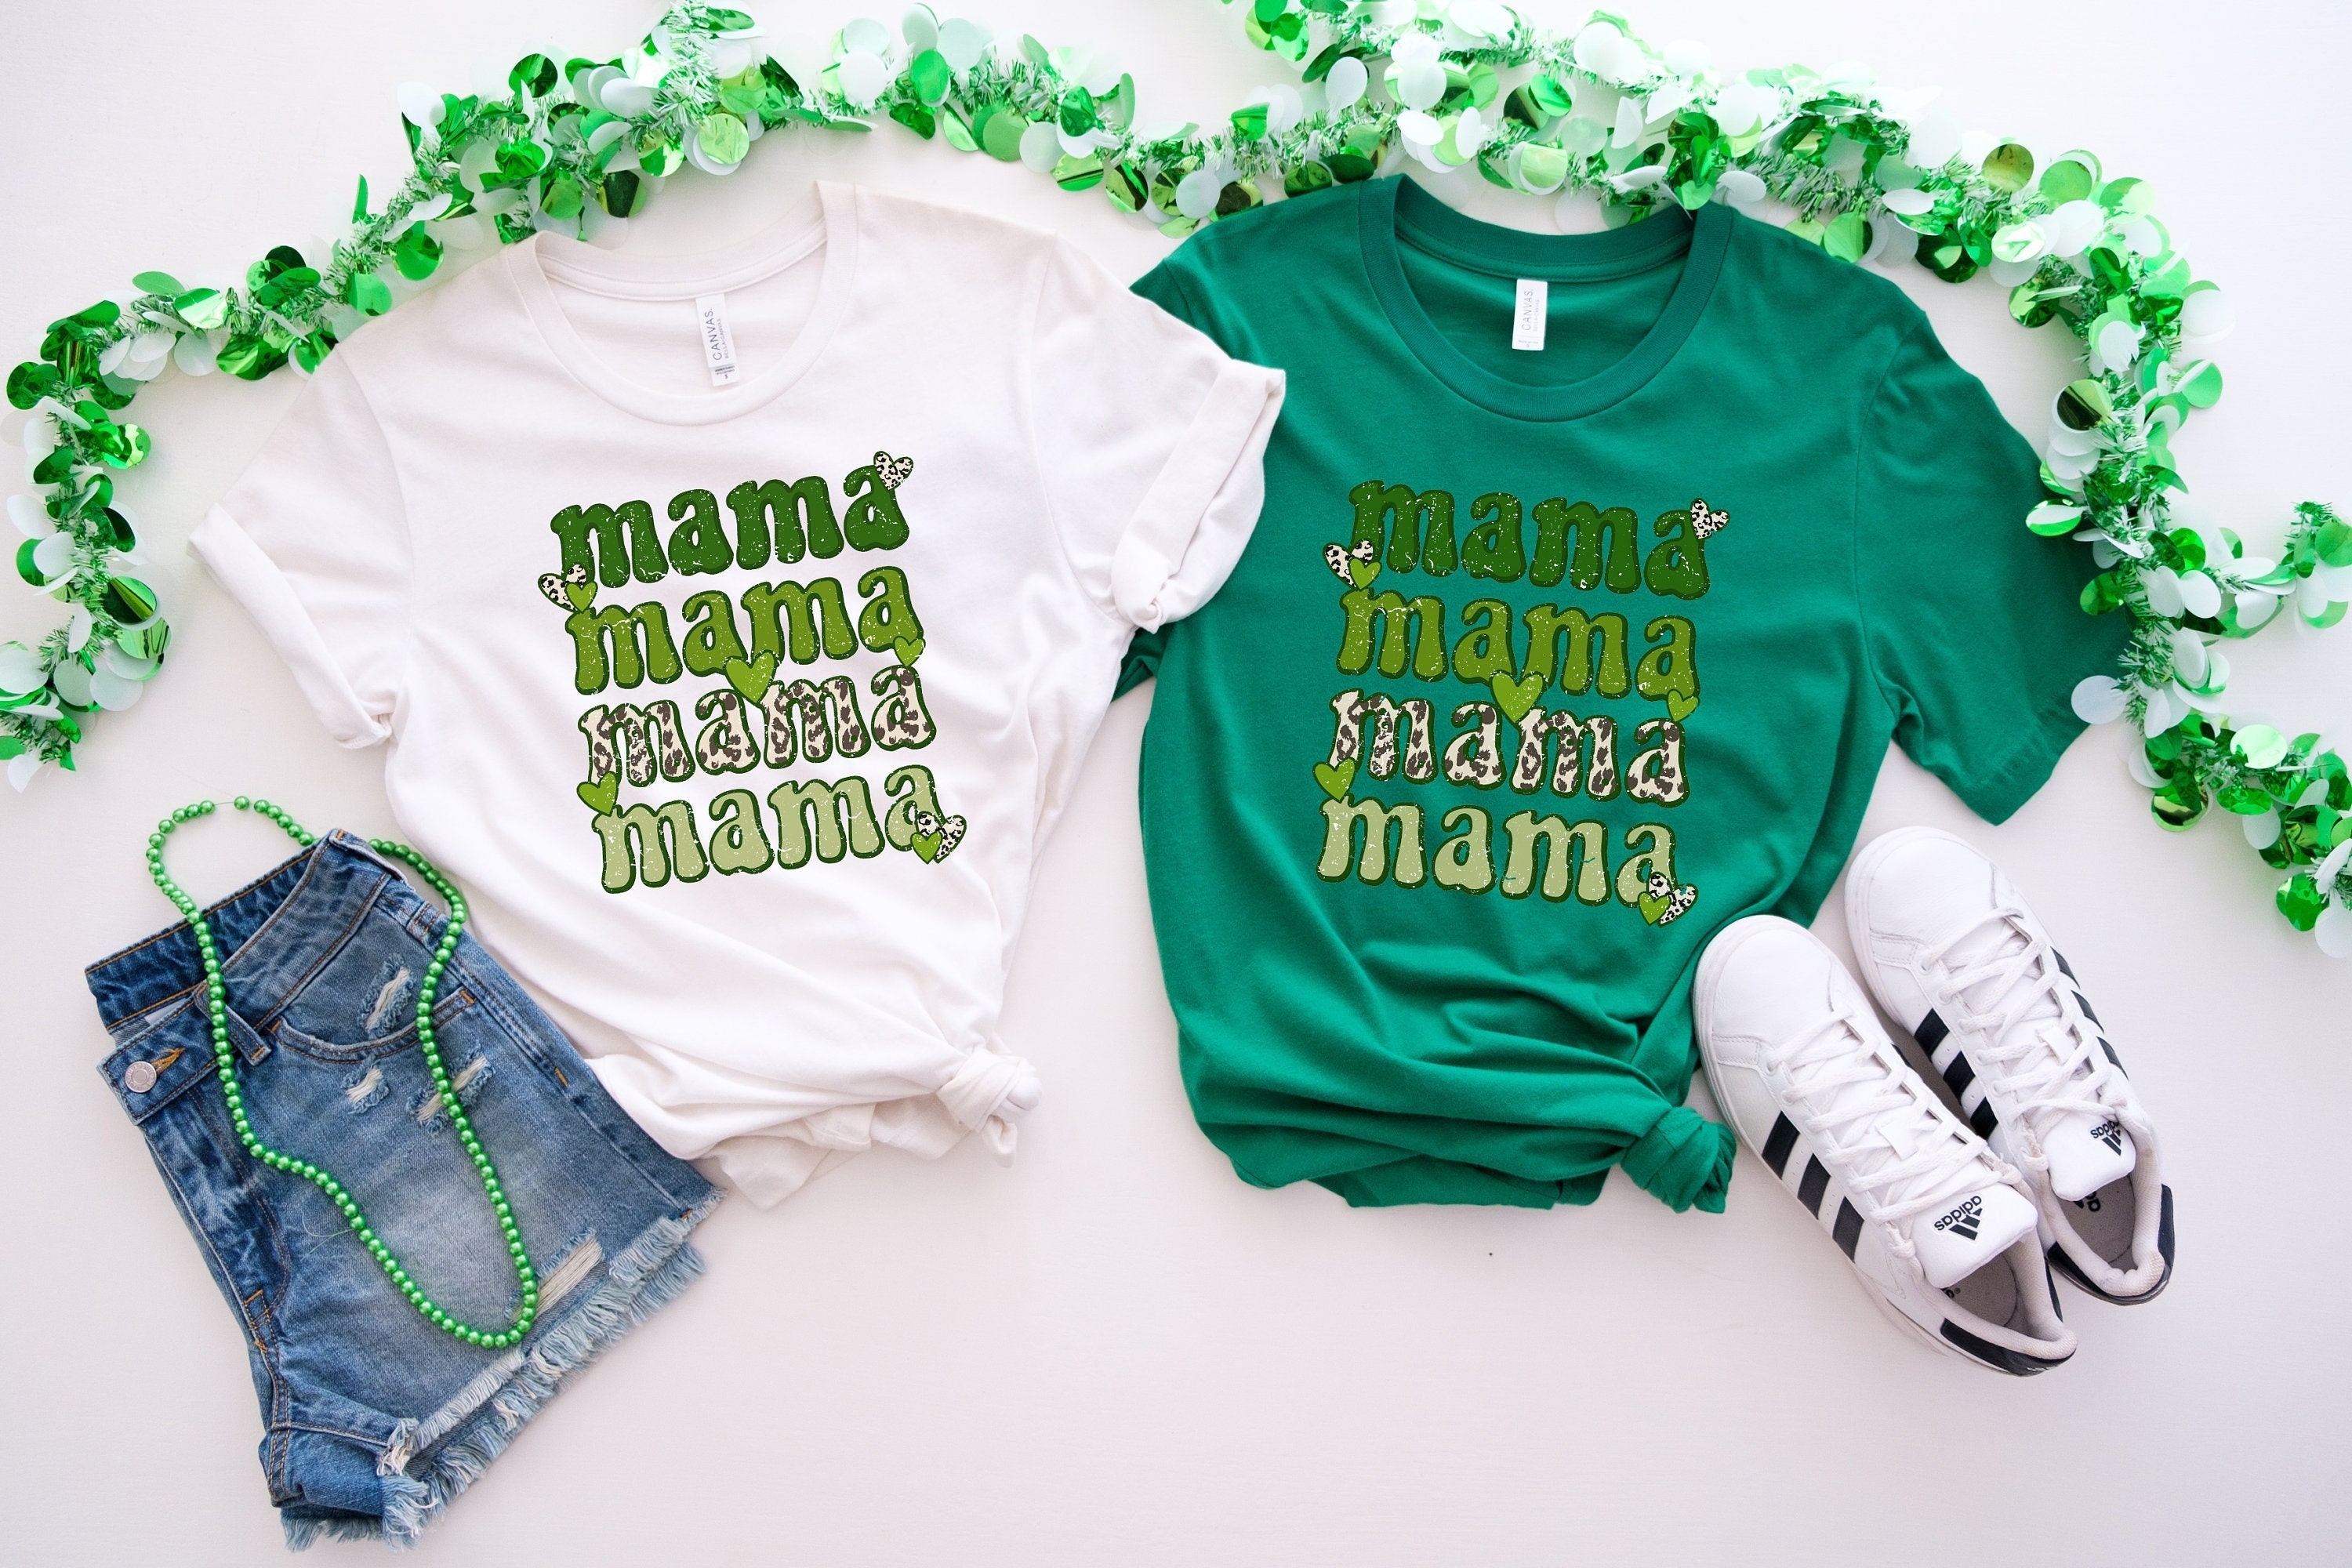 One Lucky Mama Rainbow St. Patrick's Day Bella Women's T-Shirt – GyftWear